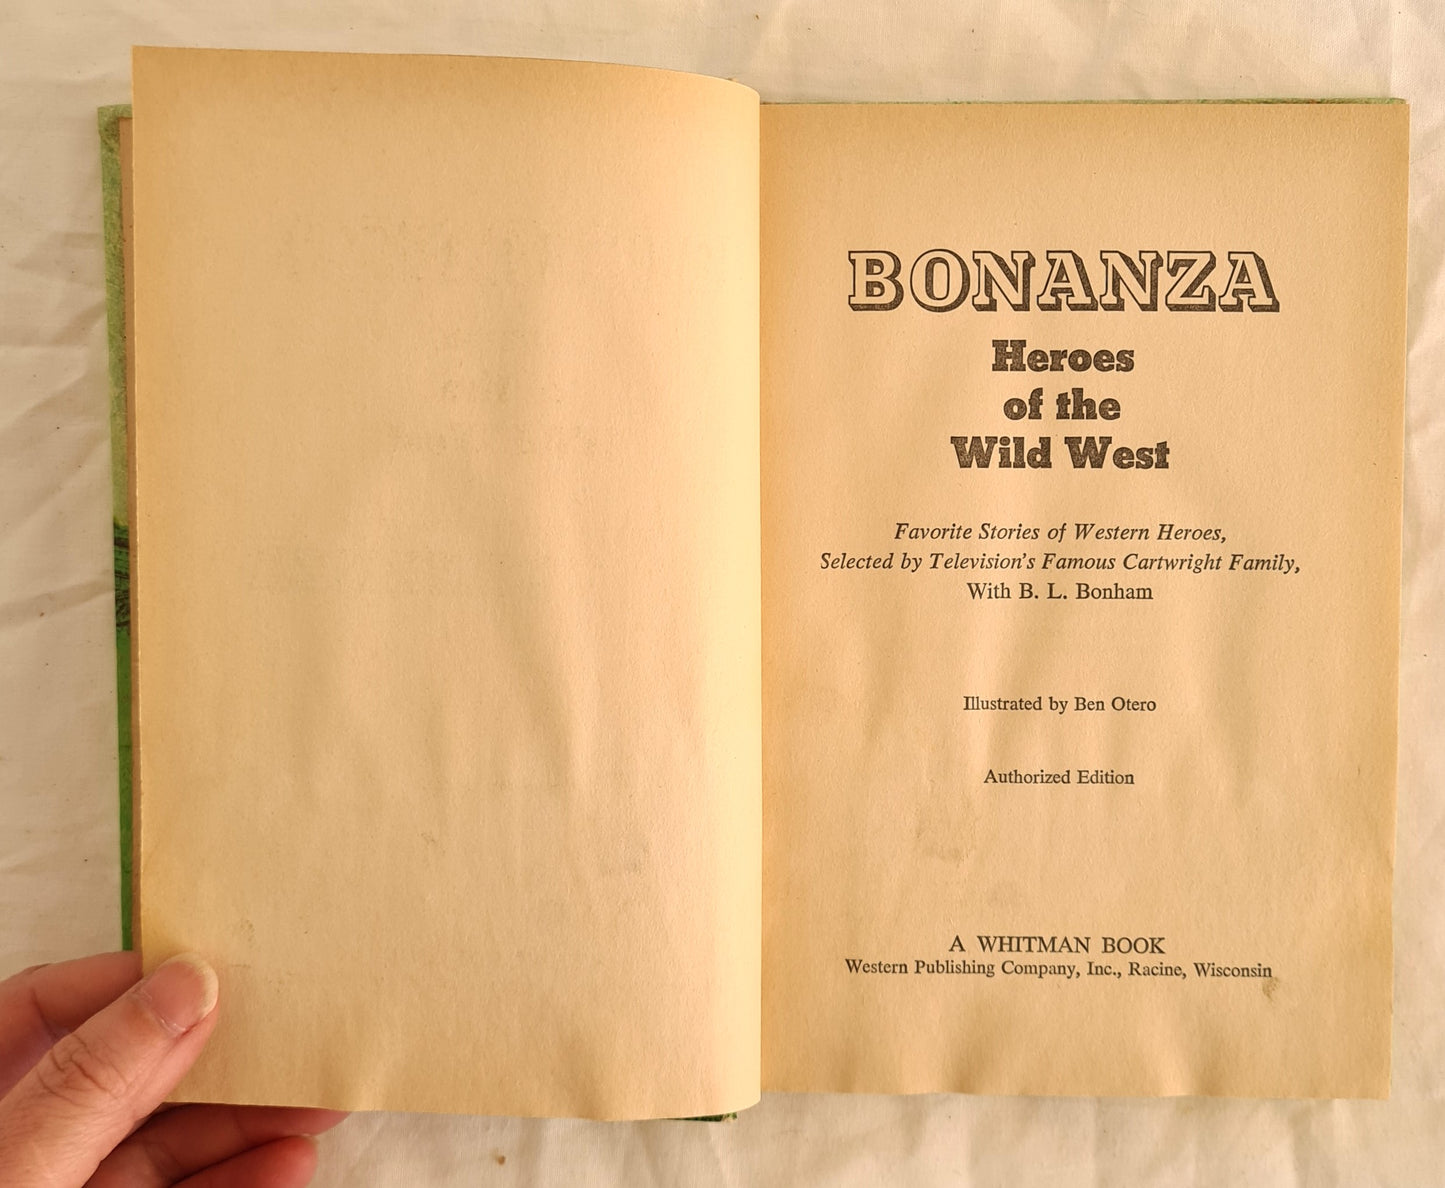 Bonanza: Heroes of the Wild West by B. L. Bonham